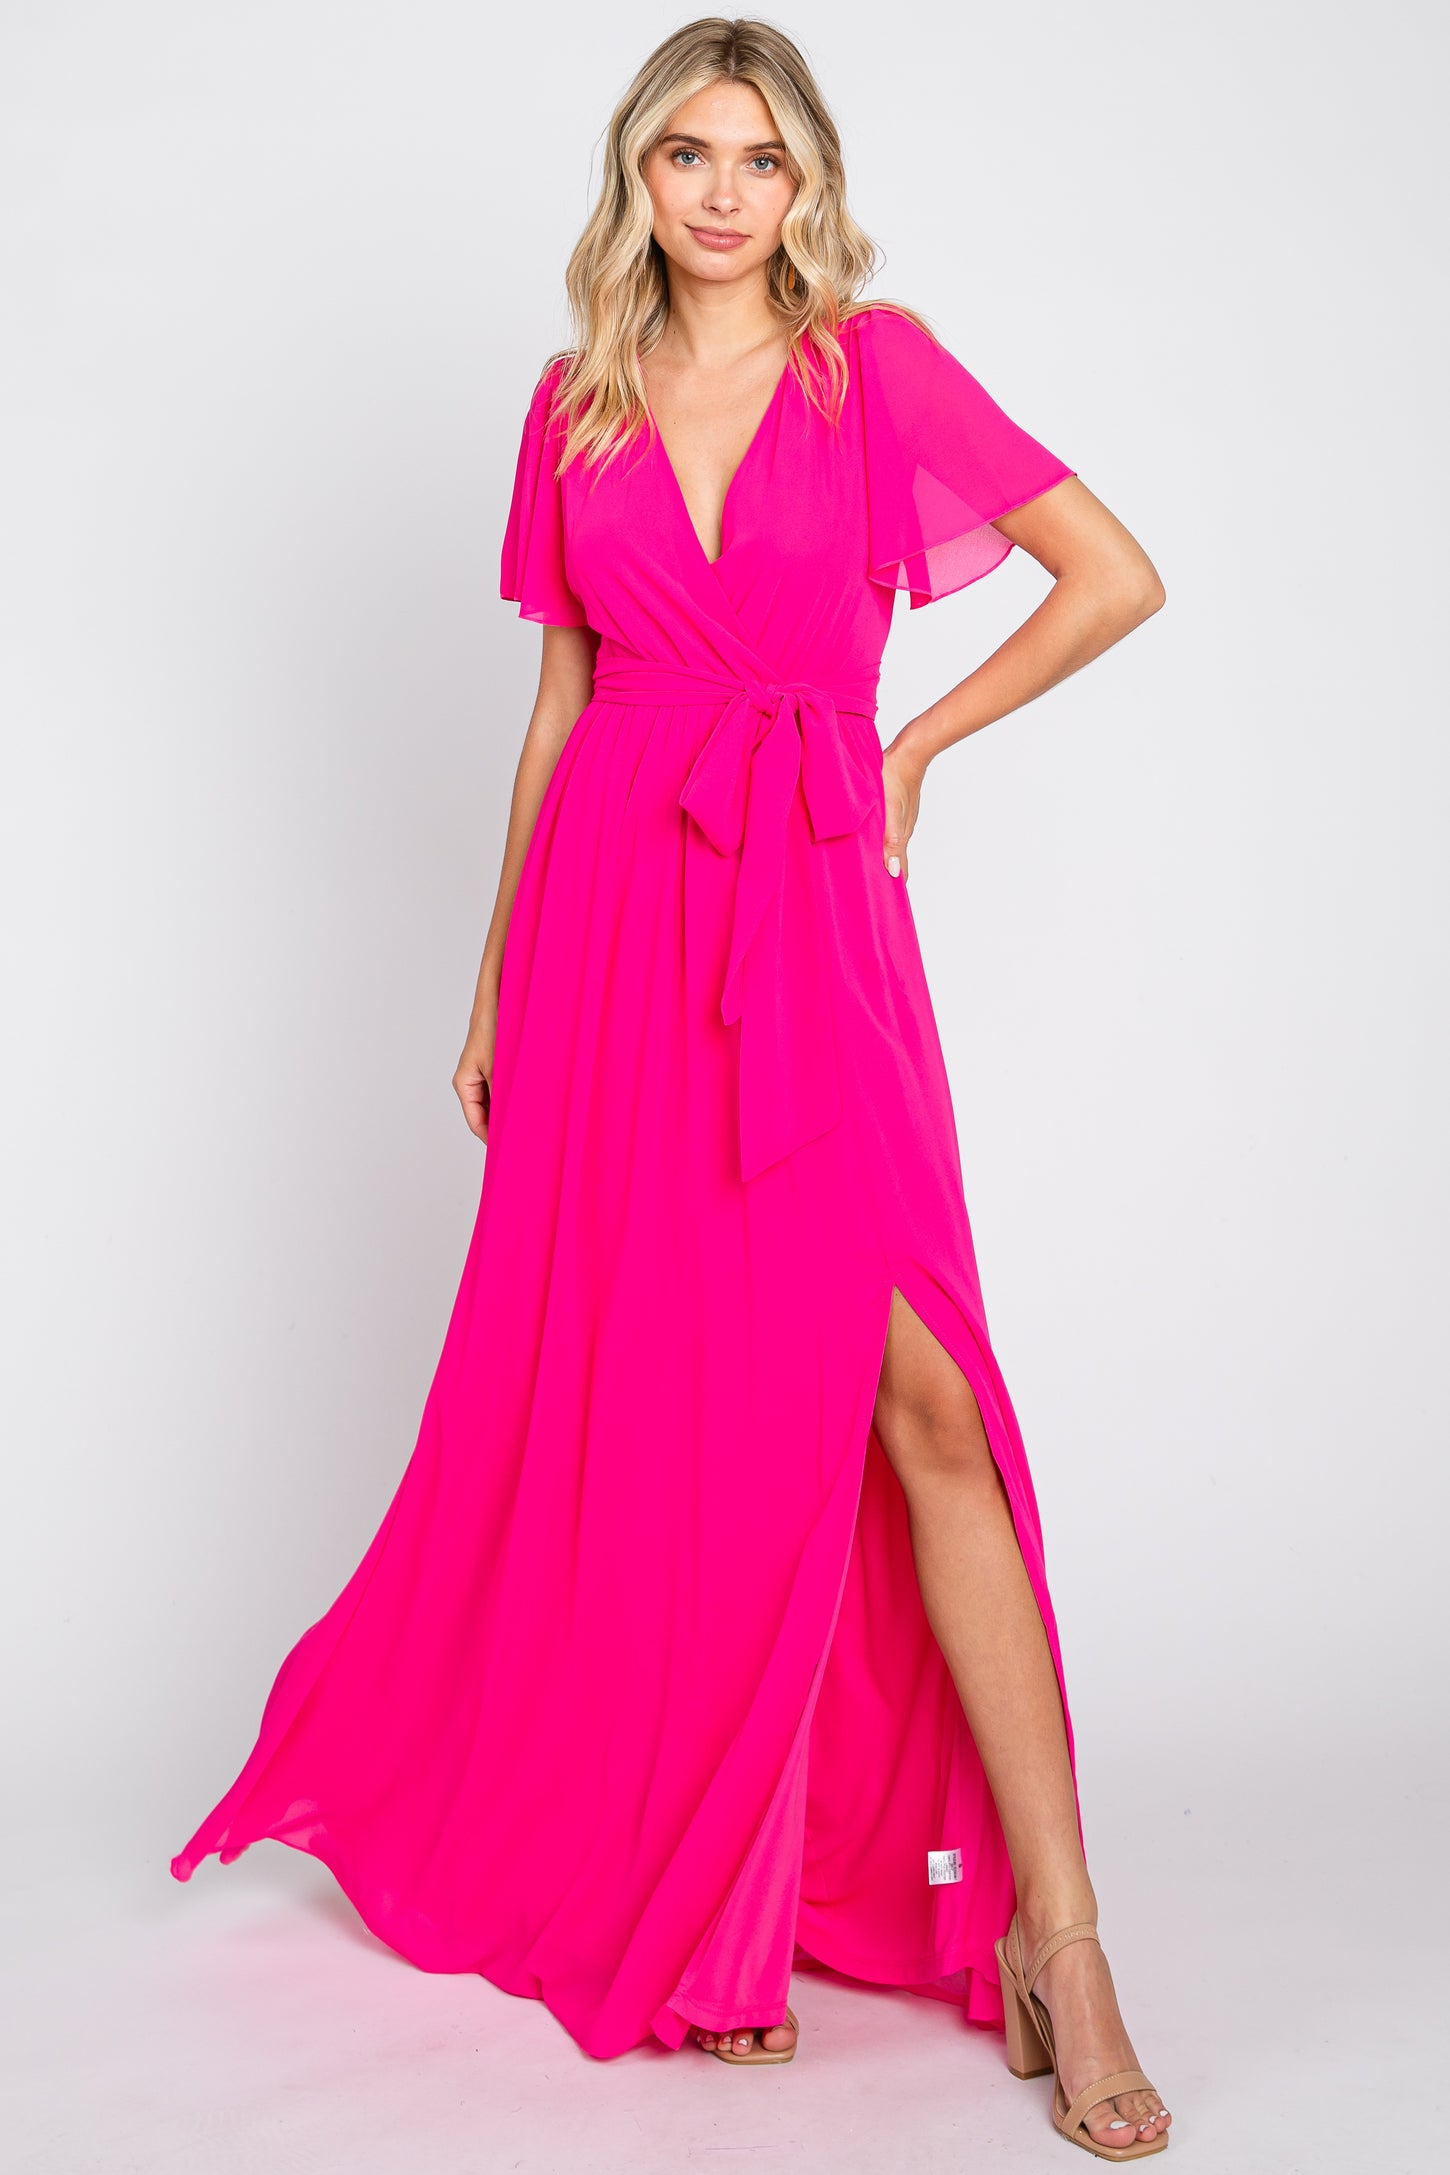 PinkBlush Pink Metallic Off Shoulder Long Sleeve Wrap Maternity Photoshoot  Gown/Dress